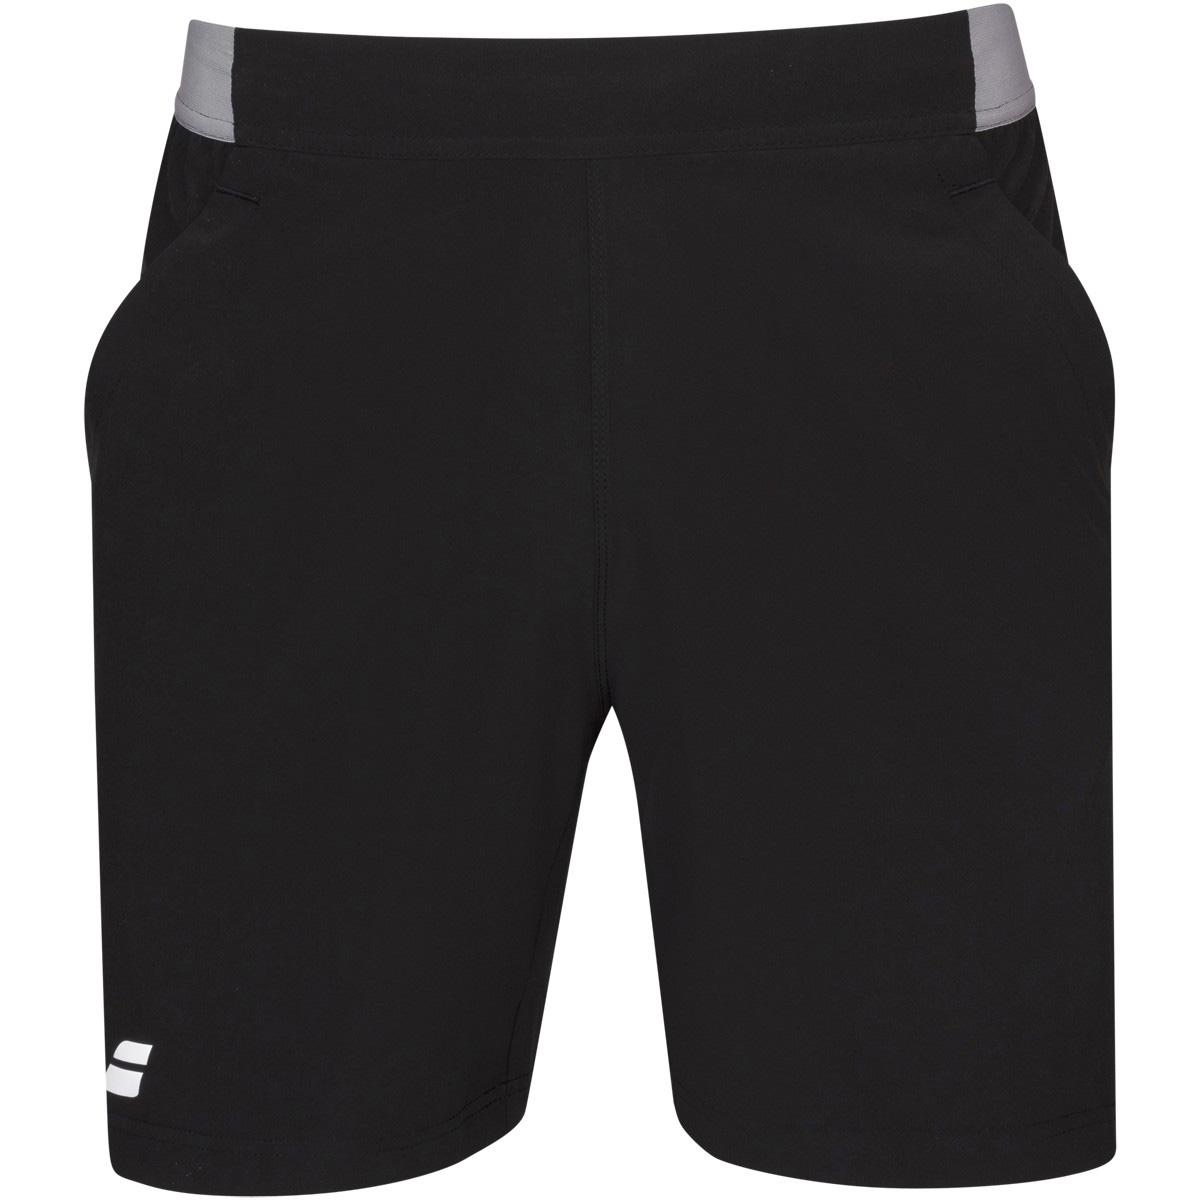 Men's Compete Shorts w/ 7 Inch Inseam Performance Polyester (Black/Black)